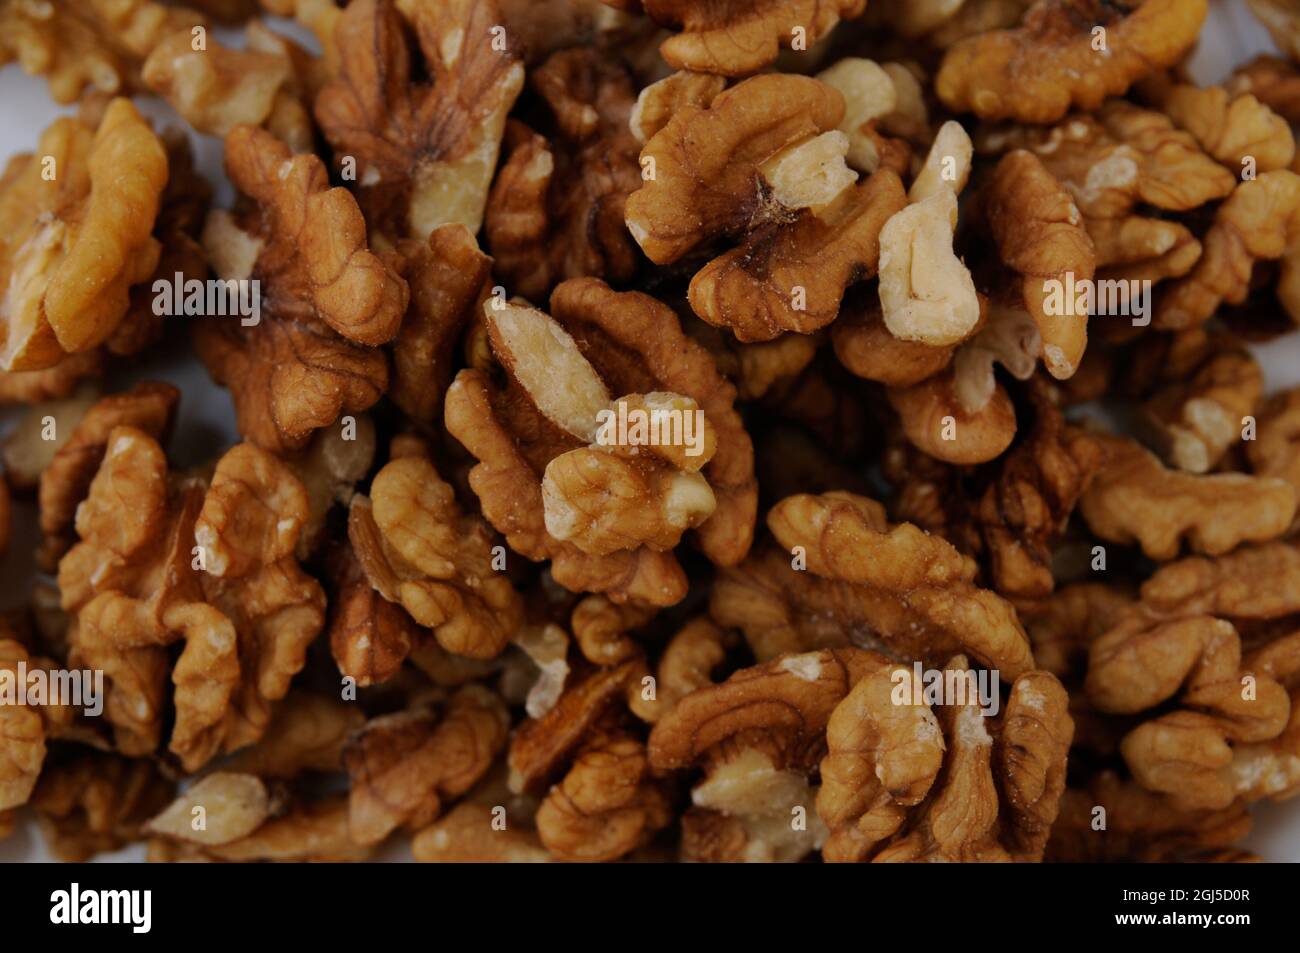 Closeup of big walnuts pile Stock Photo